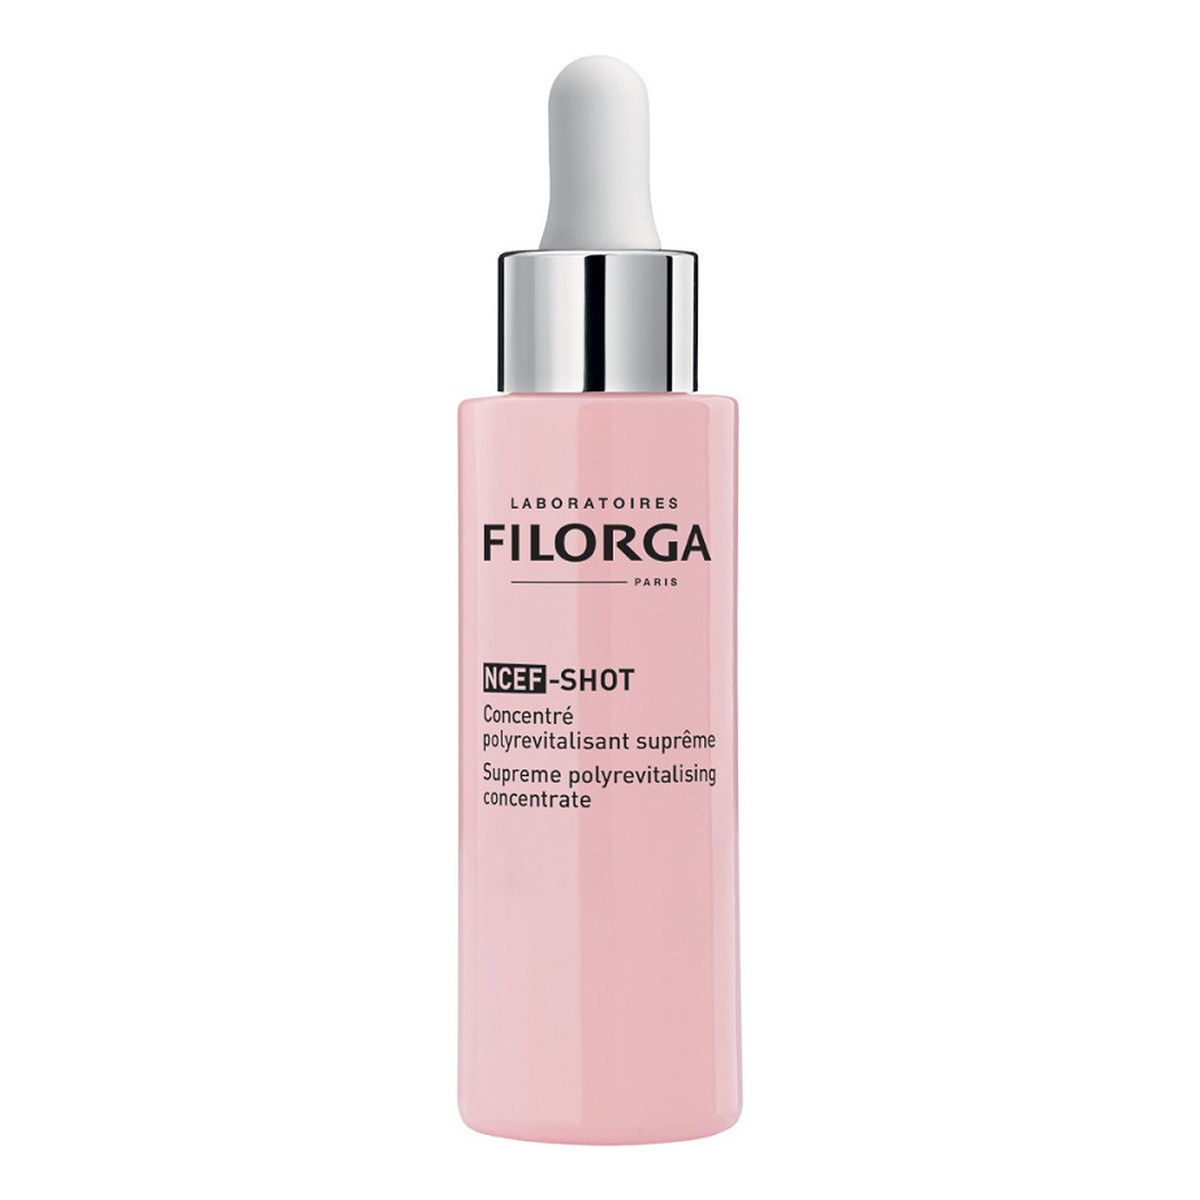 Filorga Ncef-shot supreme polyrevitalising concentrate koncentrat polirewitalizujący do twarzy 30ml